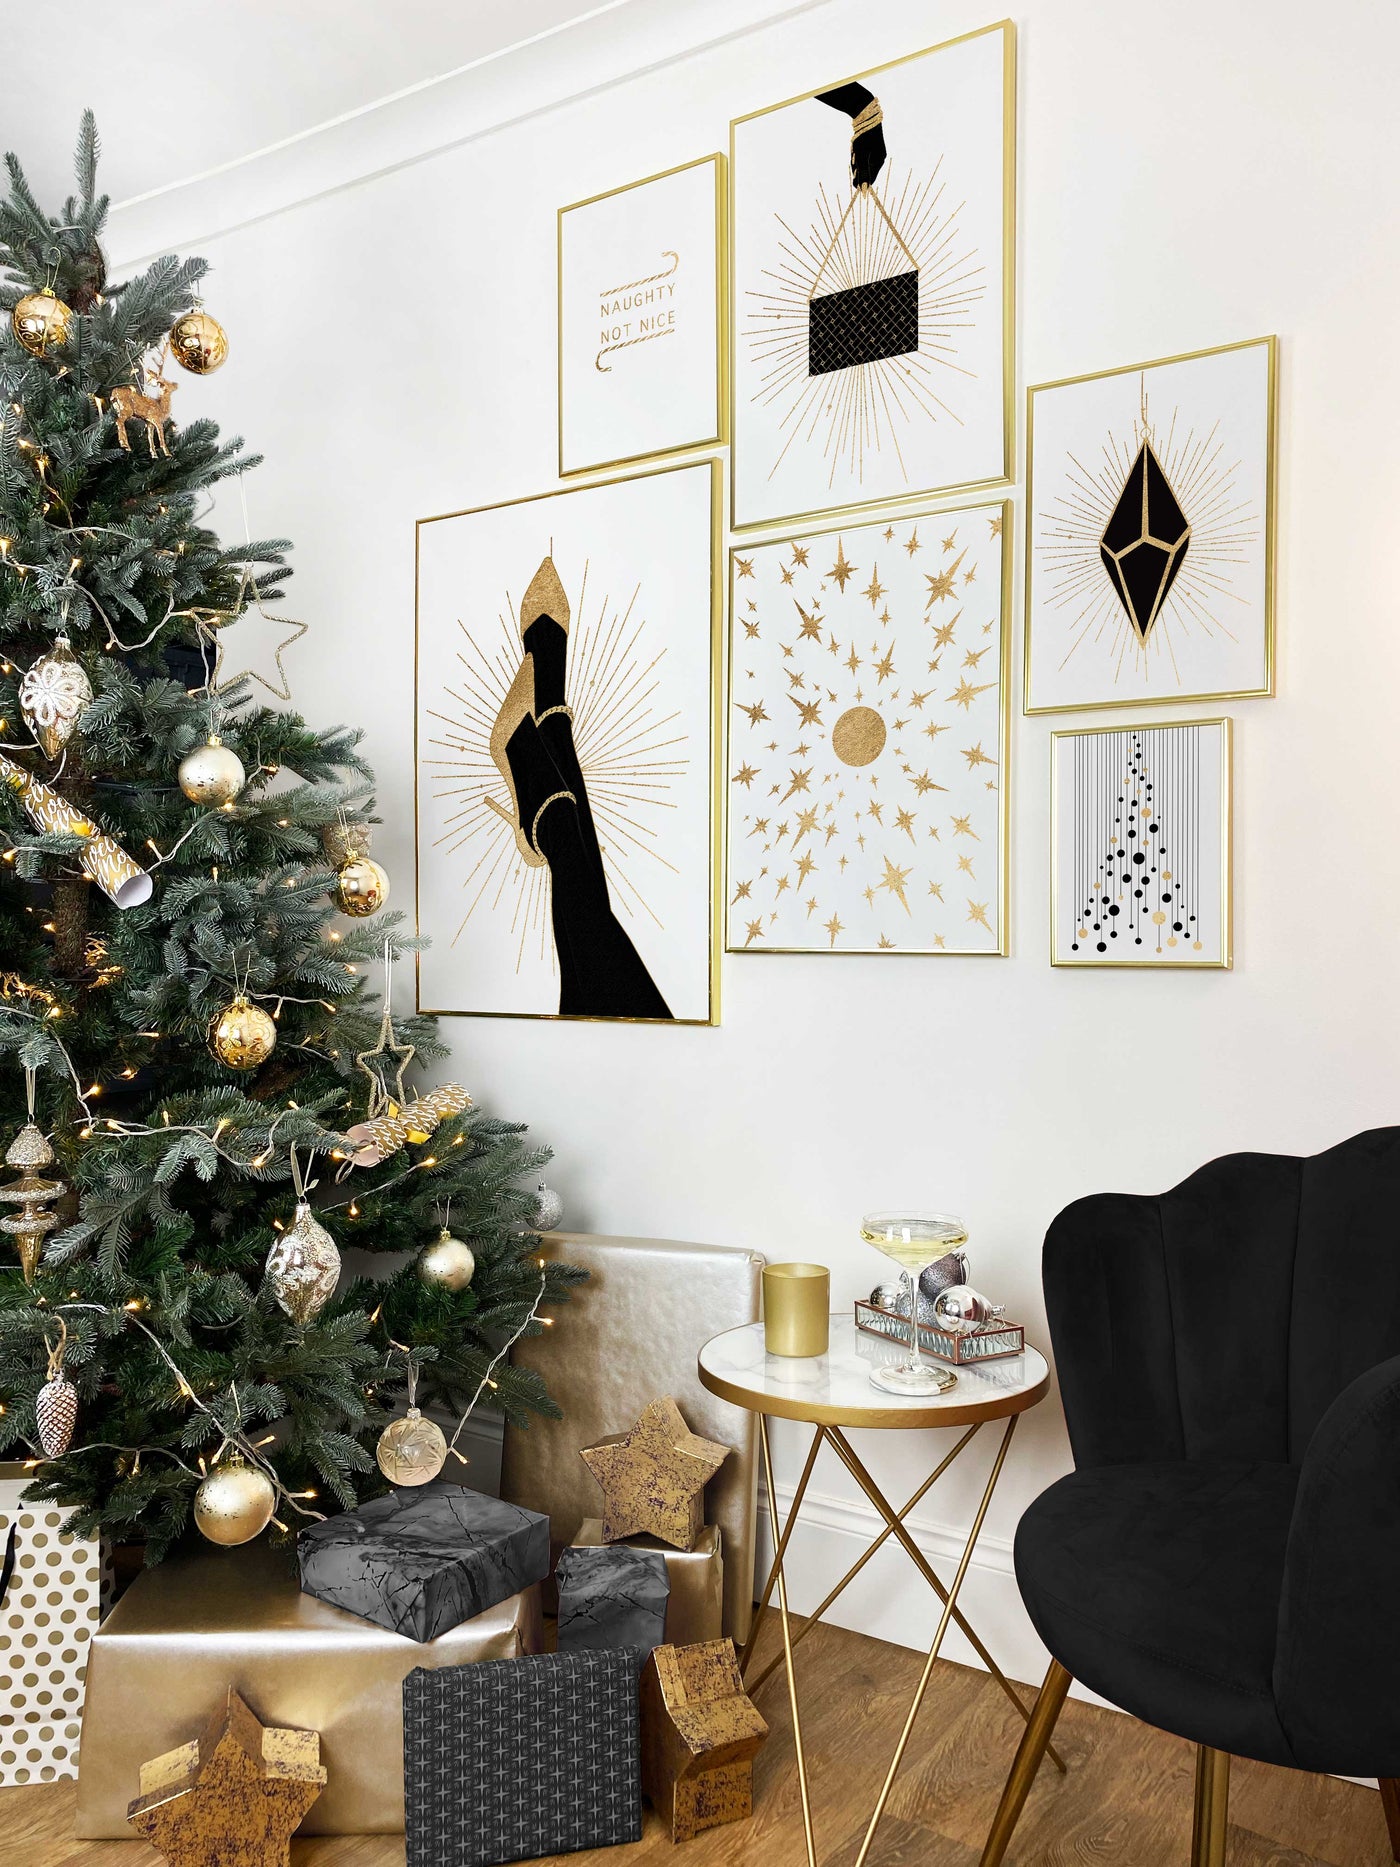 Fashion Handbag Print 'Gold Halo', Contemporary and Stylish Christmas Decoration Alternative Xmas Decor